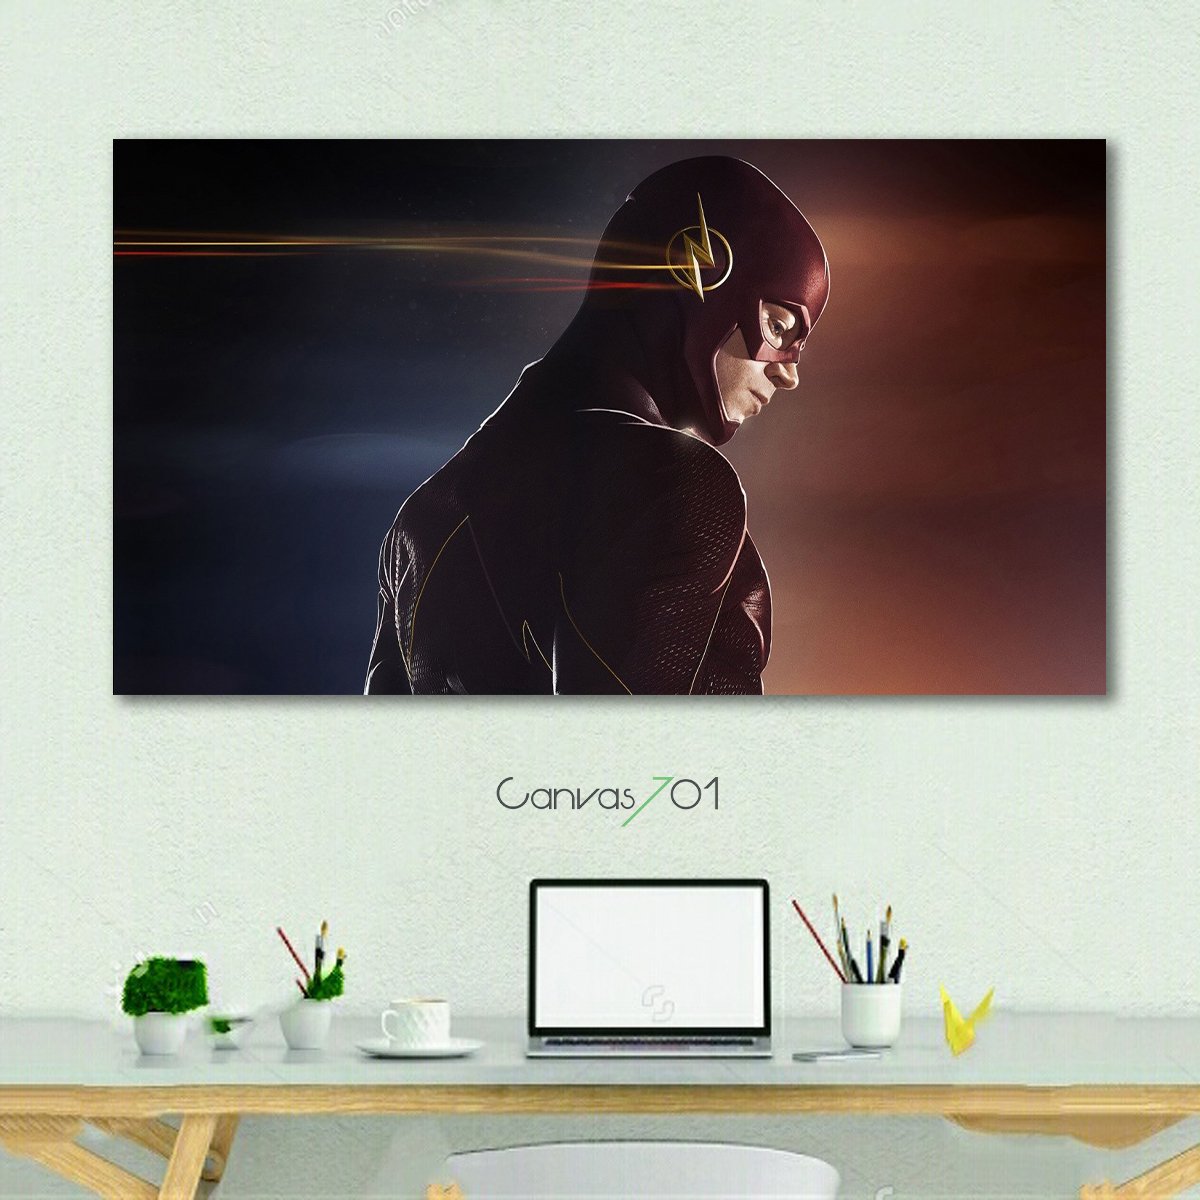 Canvas701 | The Flash Kanvas Tablo